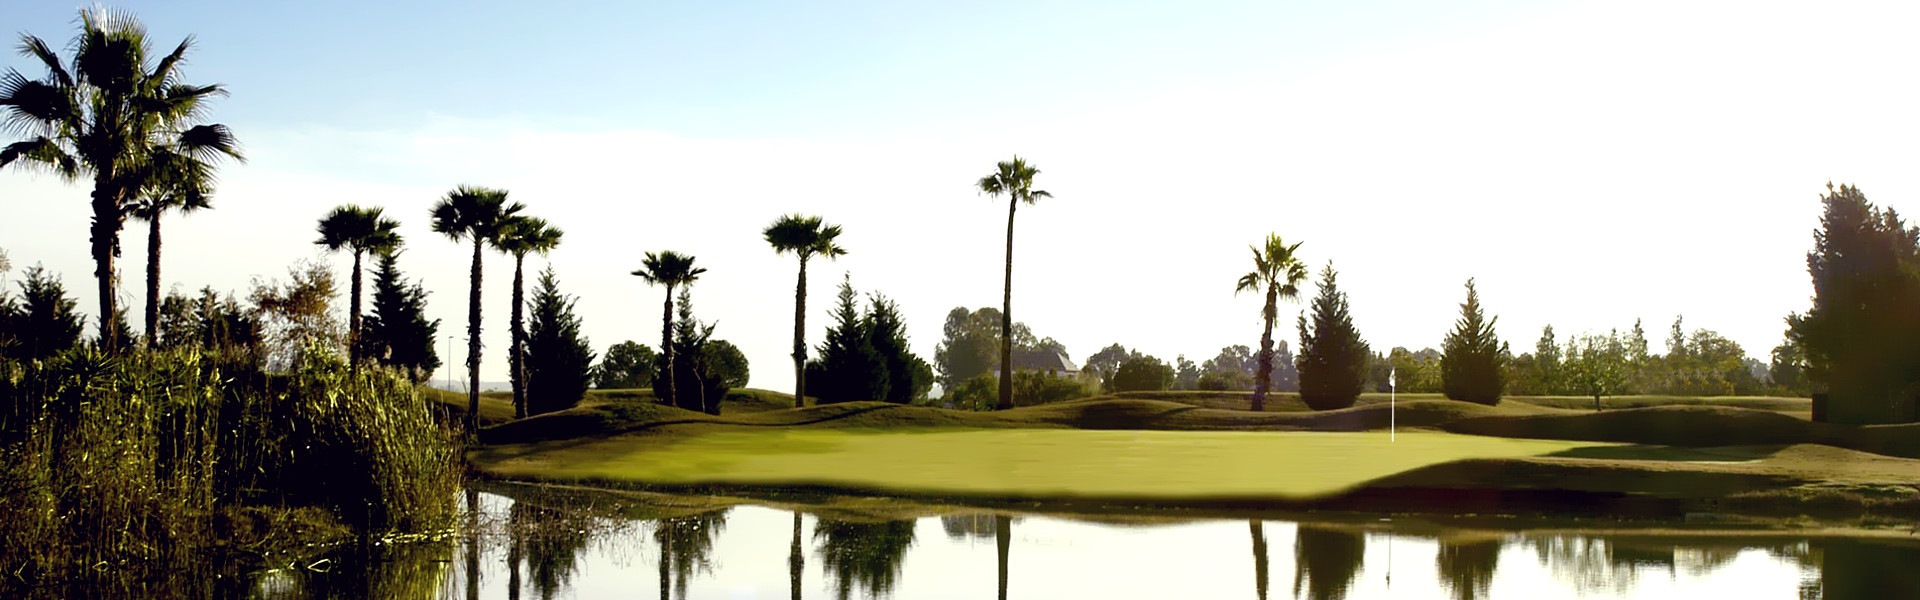 Real Club de Golf de Sevilla - Regular Host to International Tournament Competition